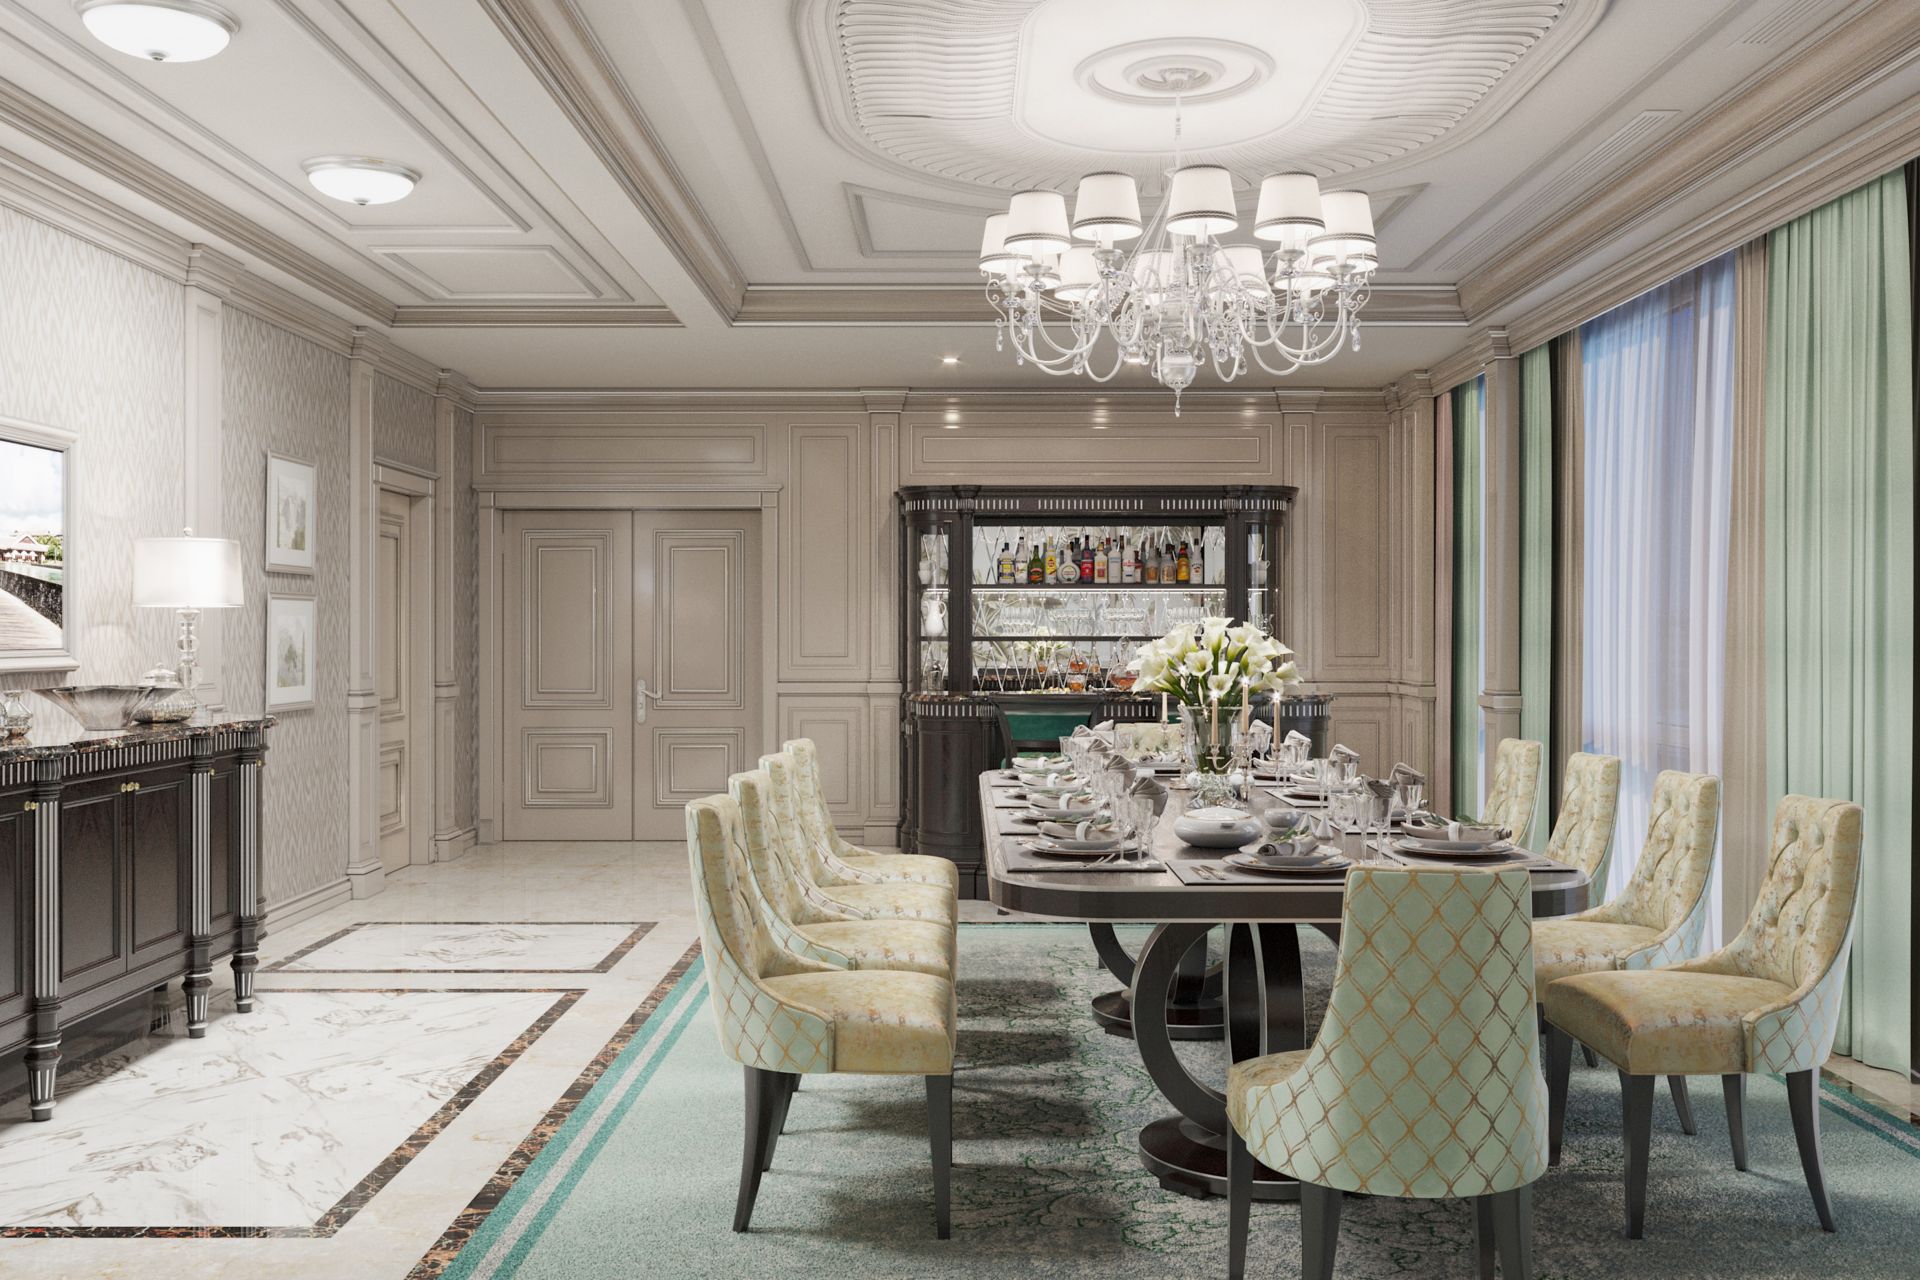 Dining room design in elegant style